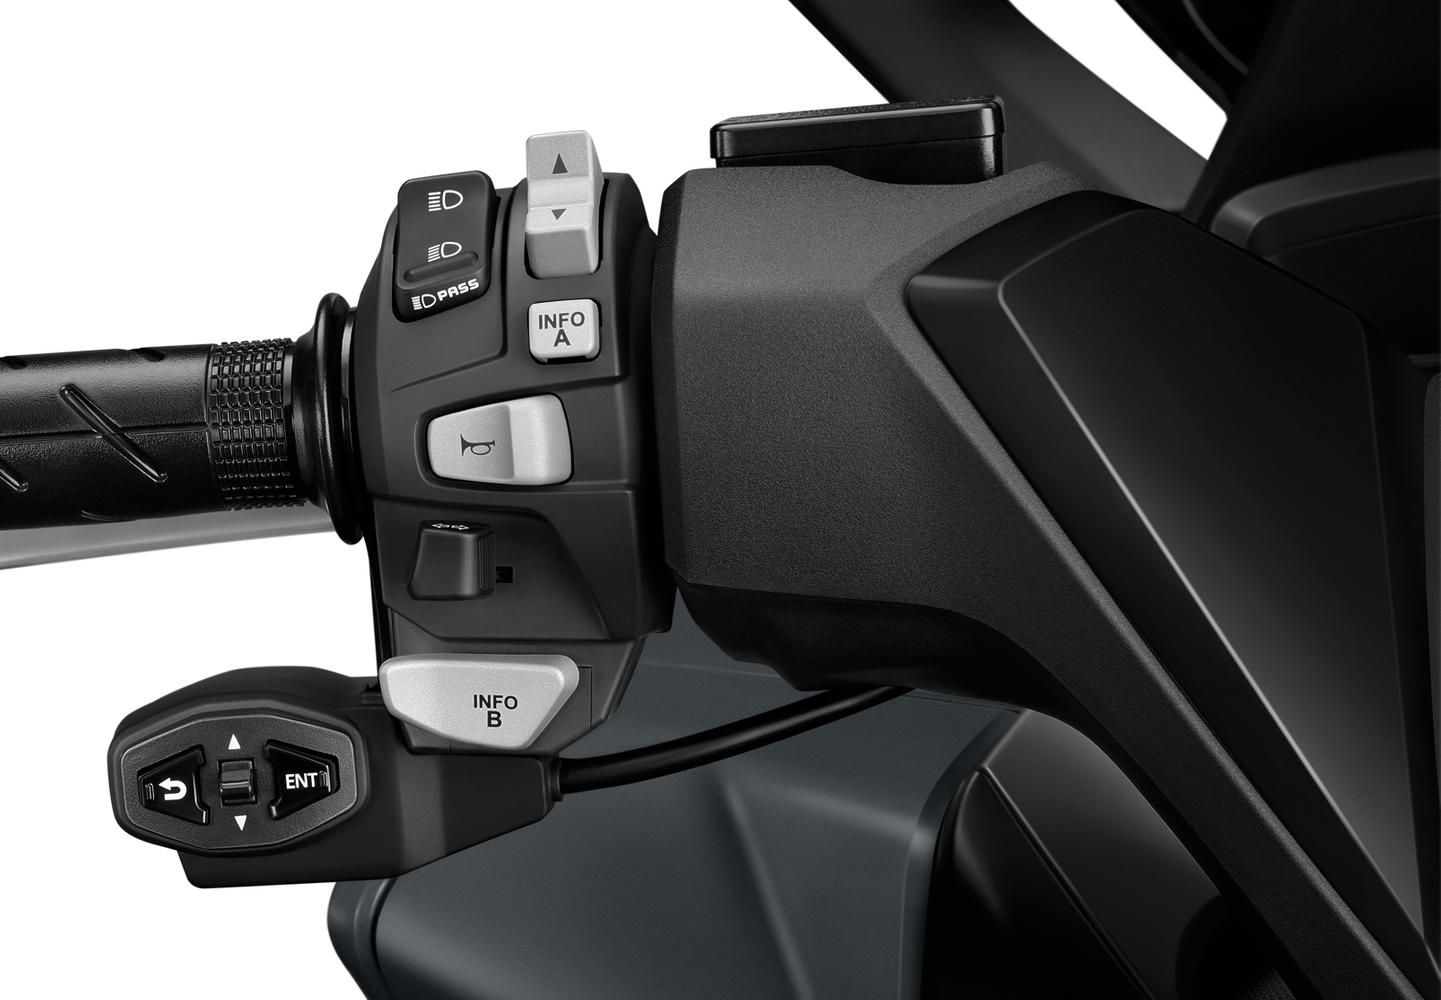 Honda NSS350 Forza - Honda Smartphone Voice Control System